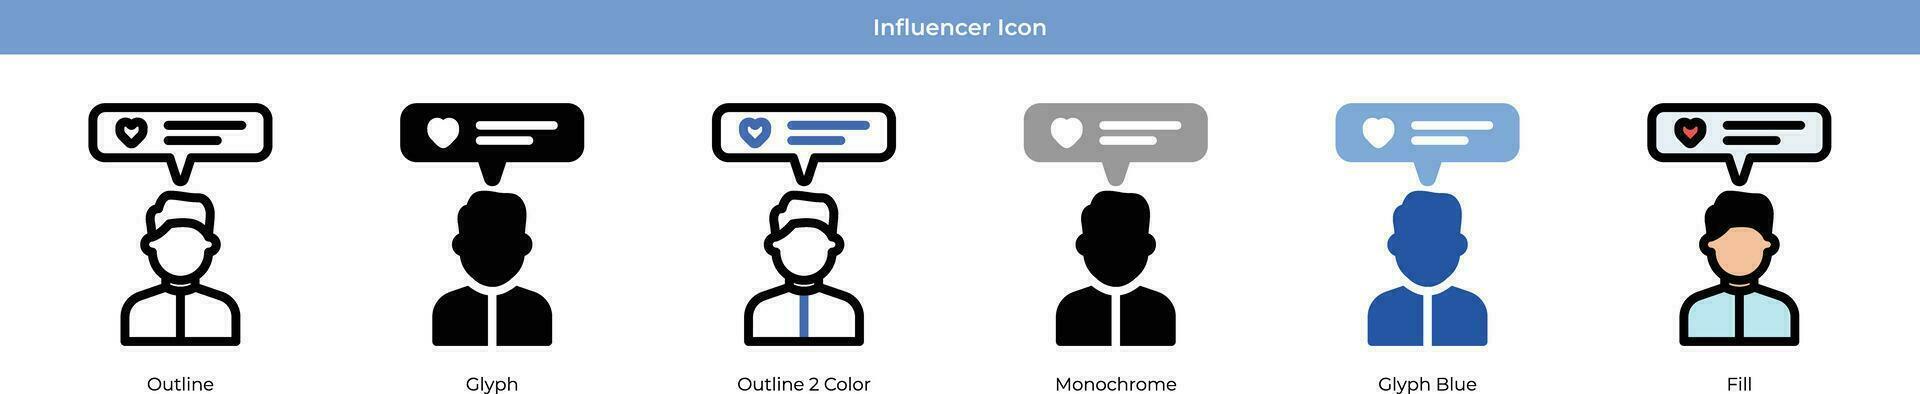 Influencer Icon Set vector